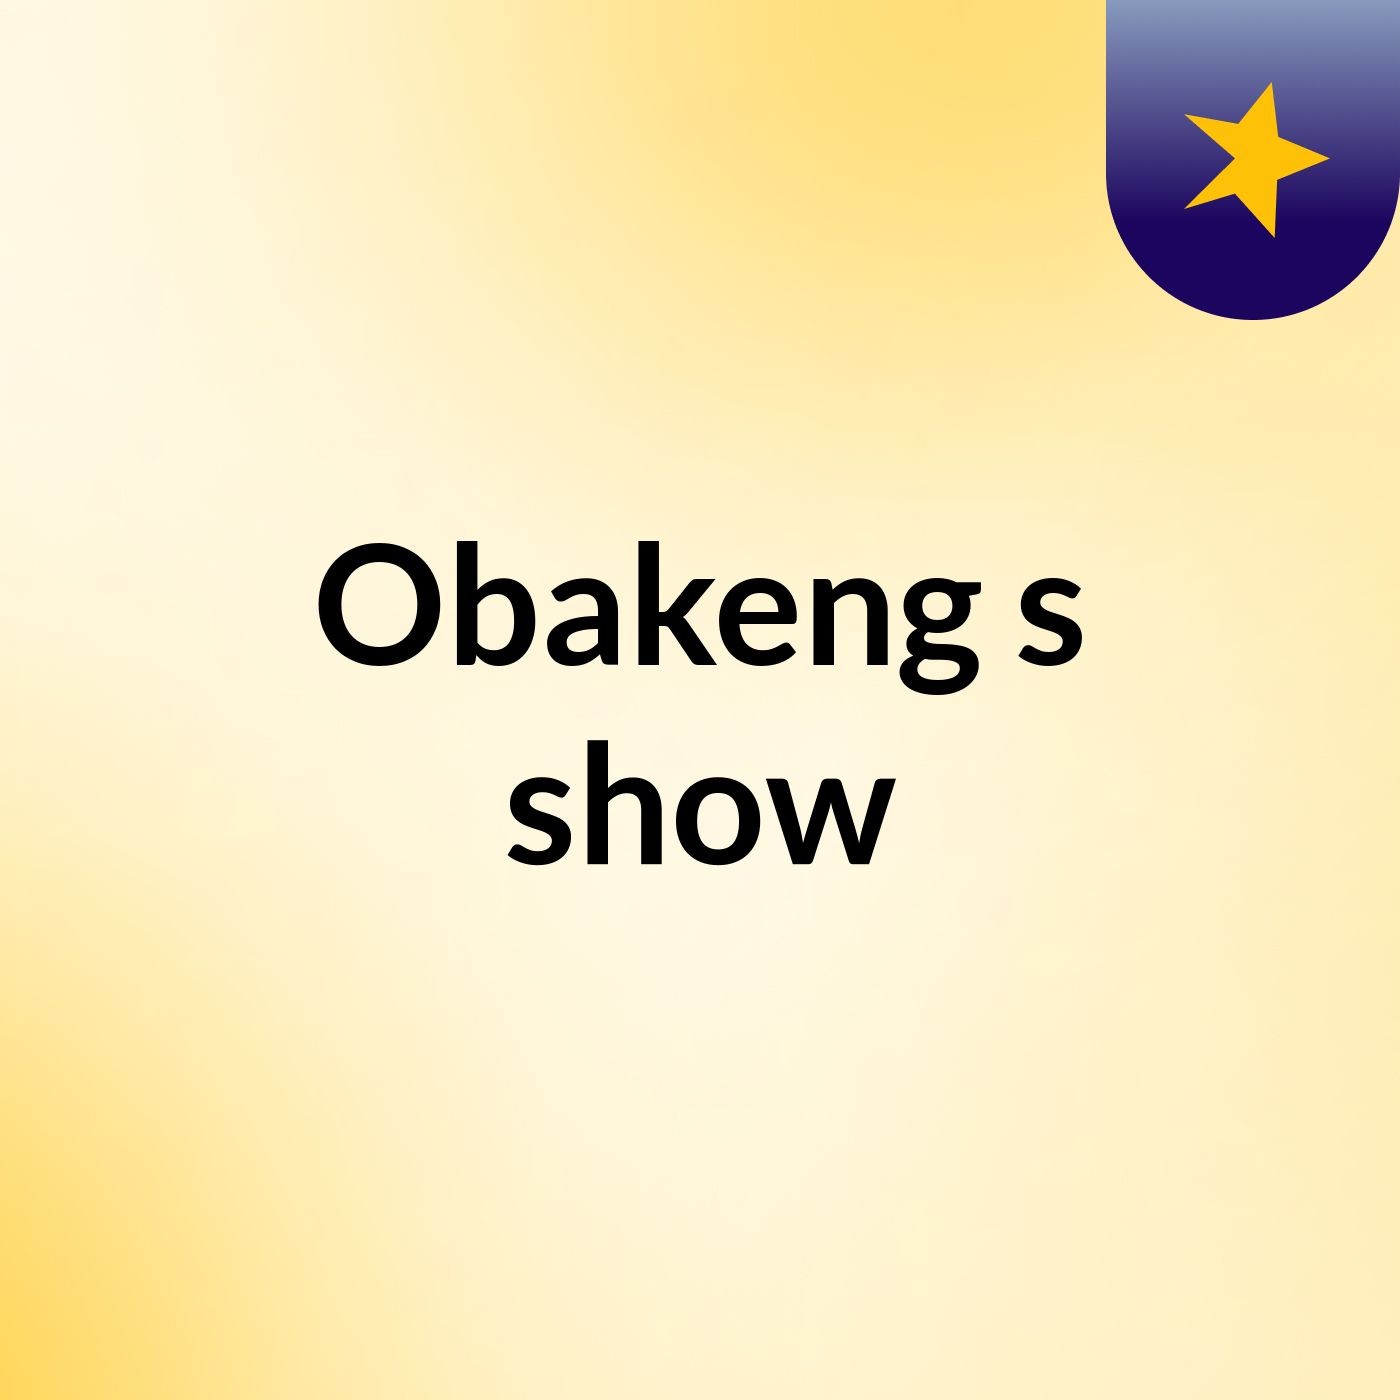 Obakeng's show